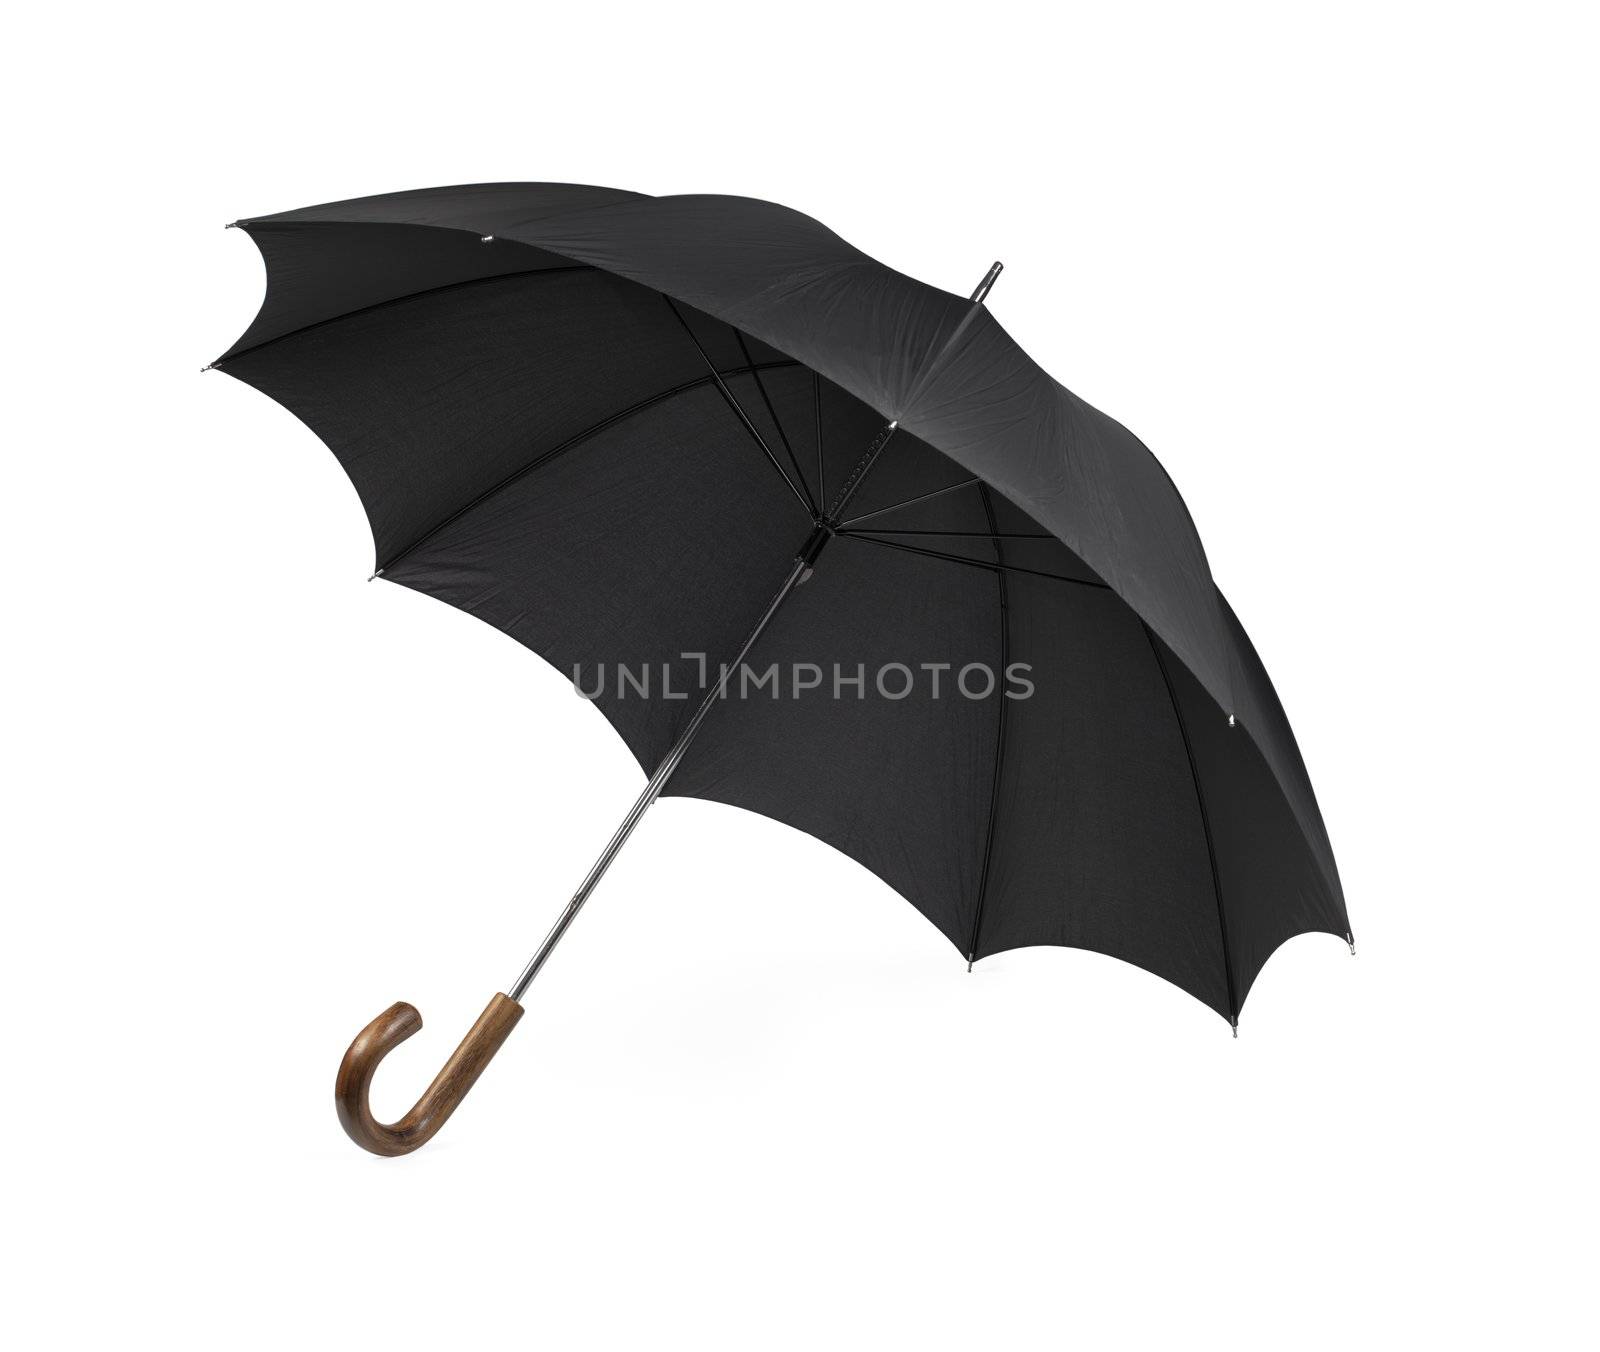 Vintage umbrella by Stocksnapper